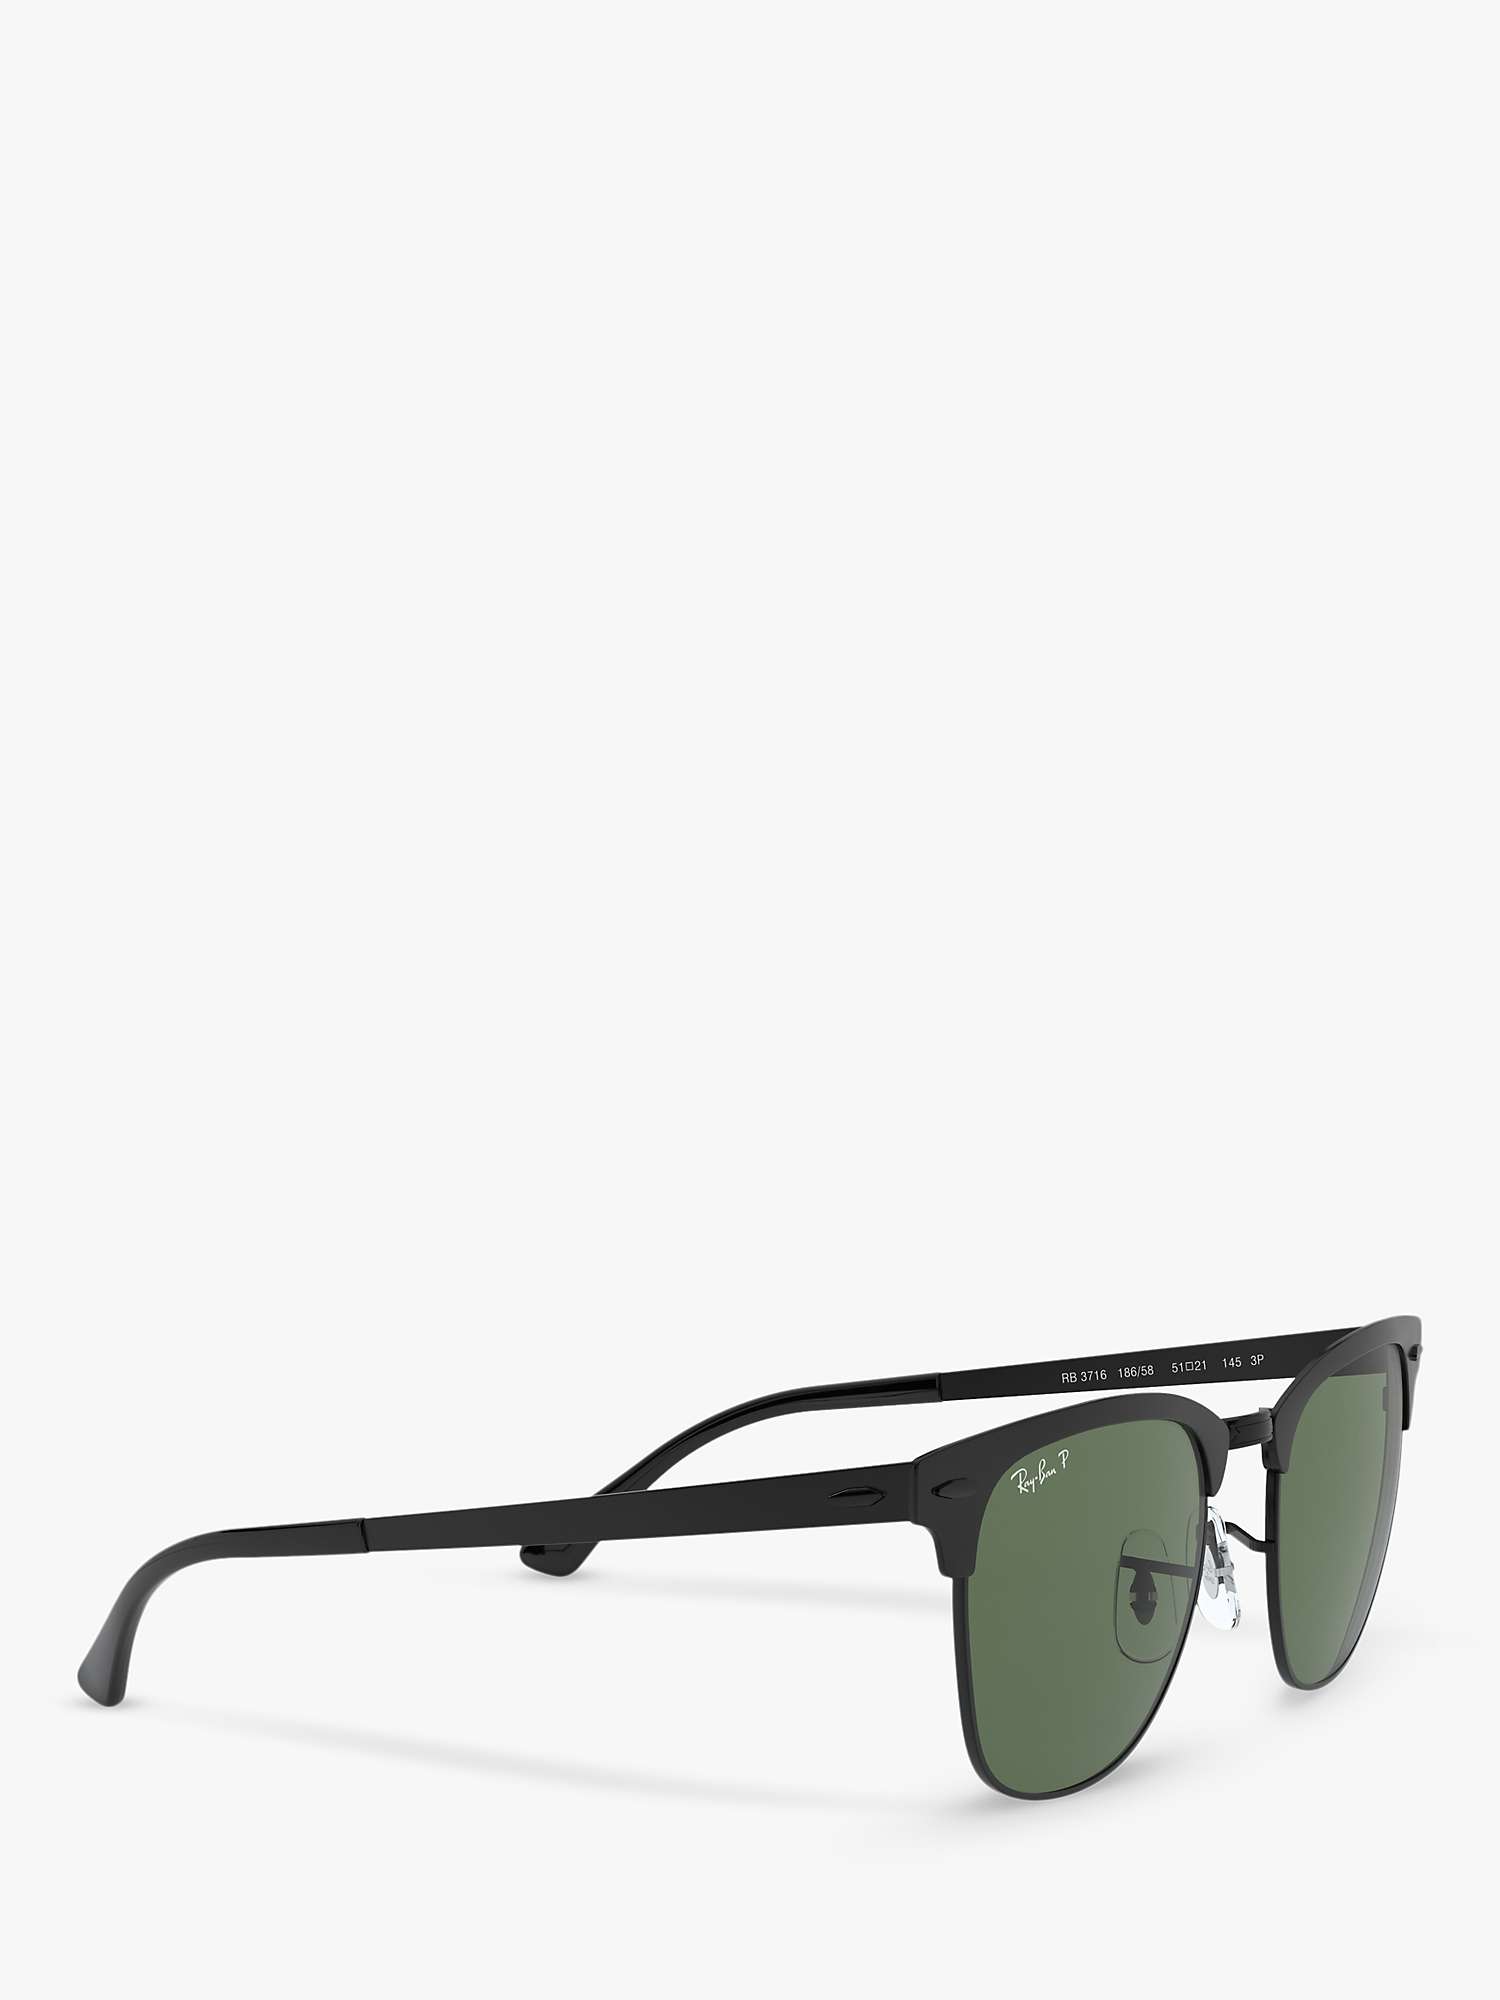 Buy Ray-Ban RB3716 Unisex Square Polarised Sunglasses, Black Top Matte Online at johnlewis.com